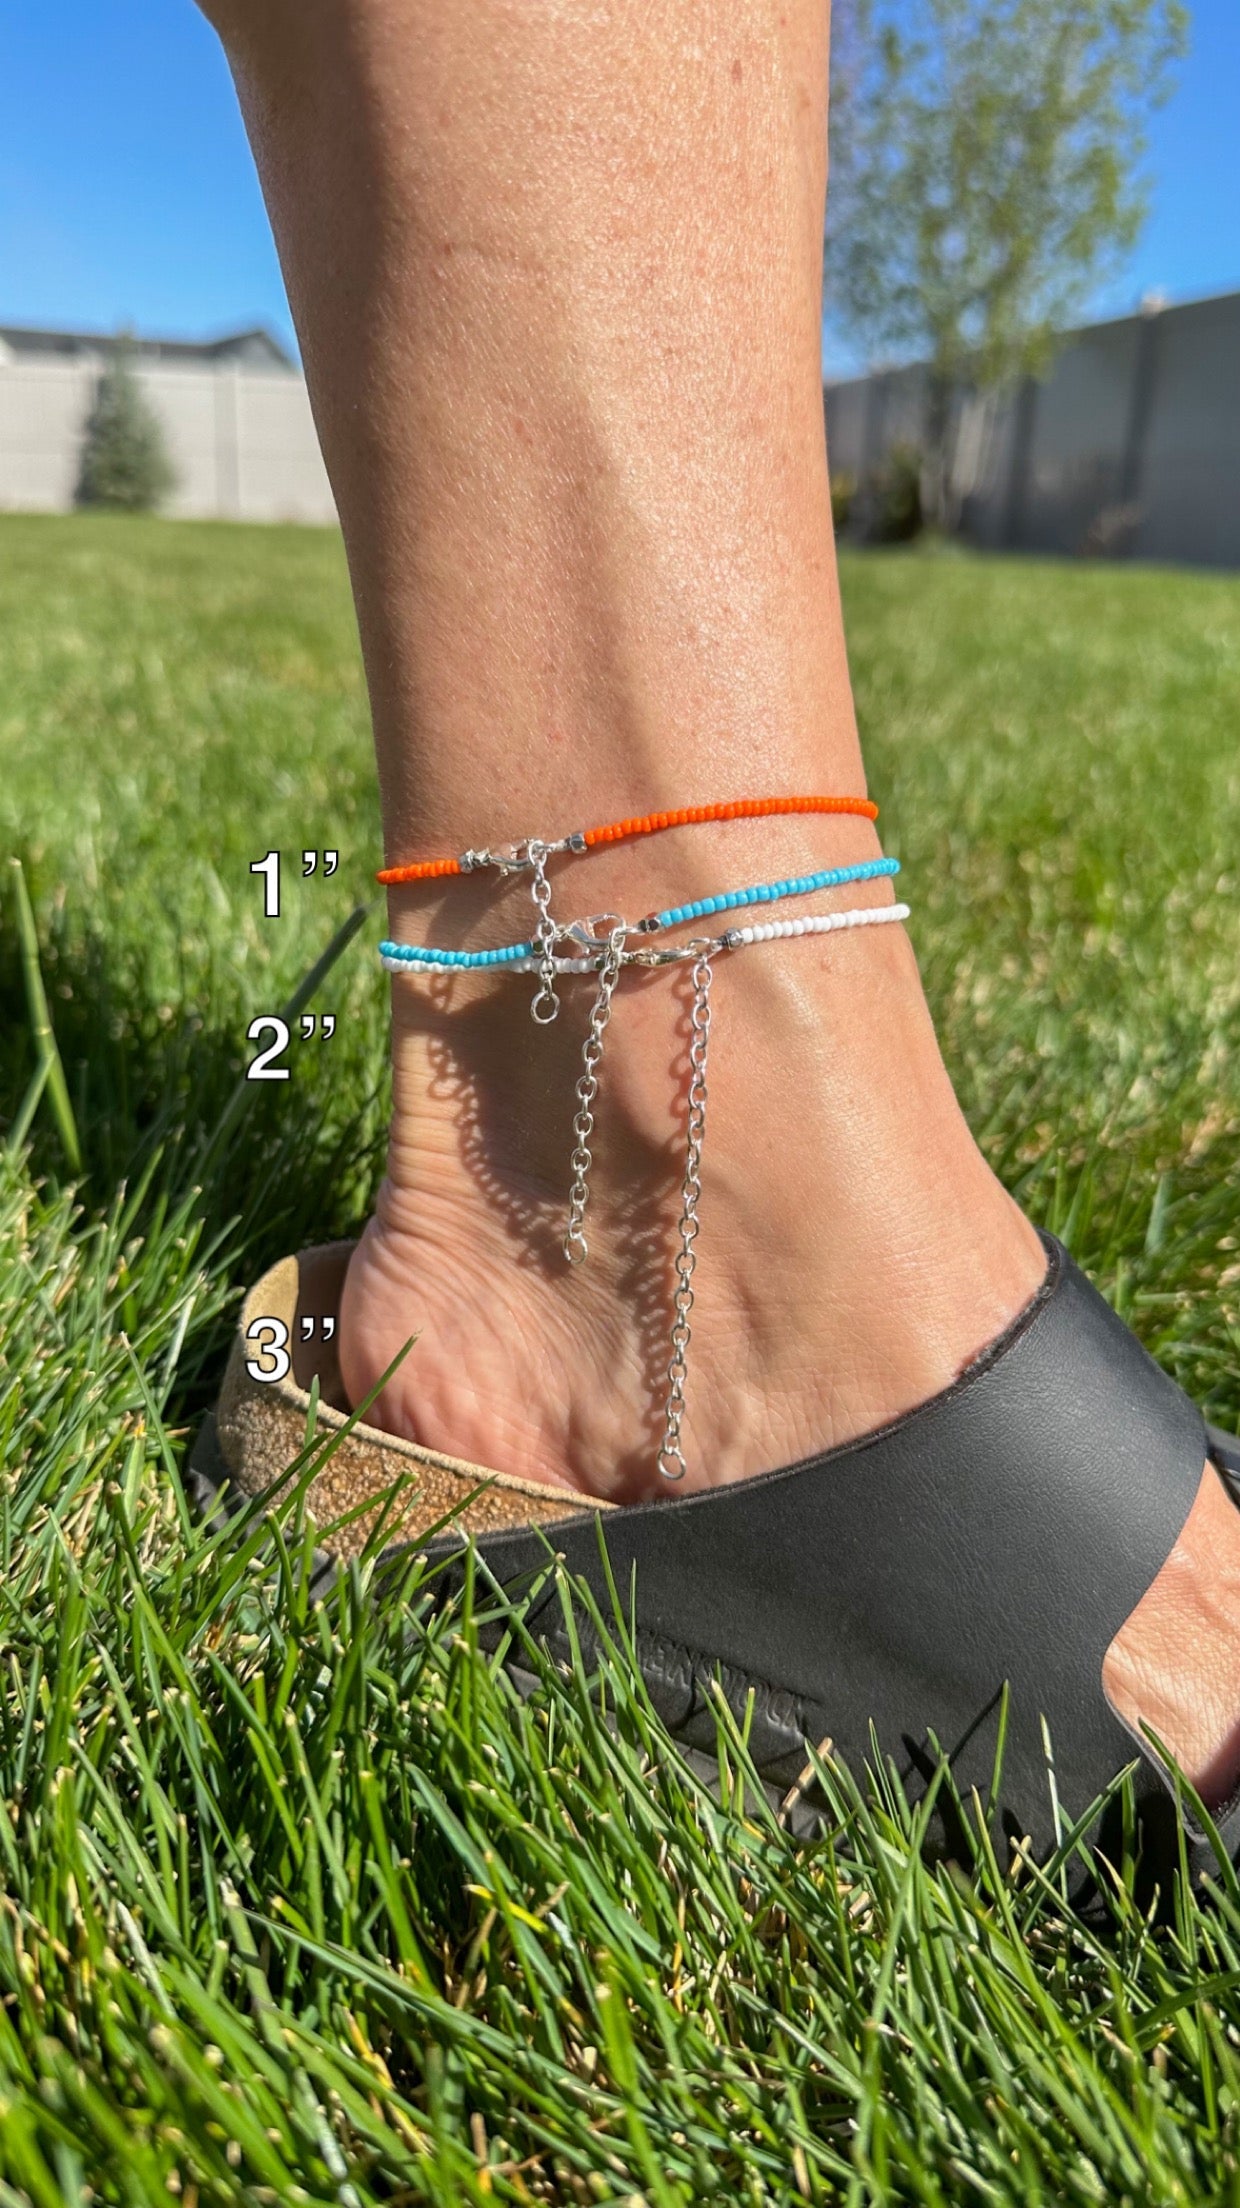 Single Strand, Multi-Colored Anklet